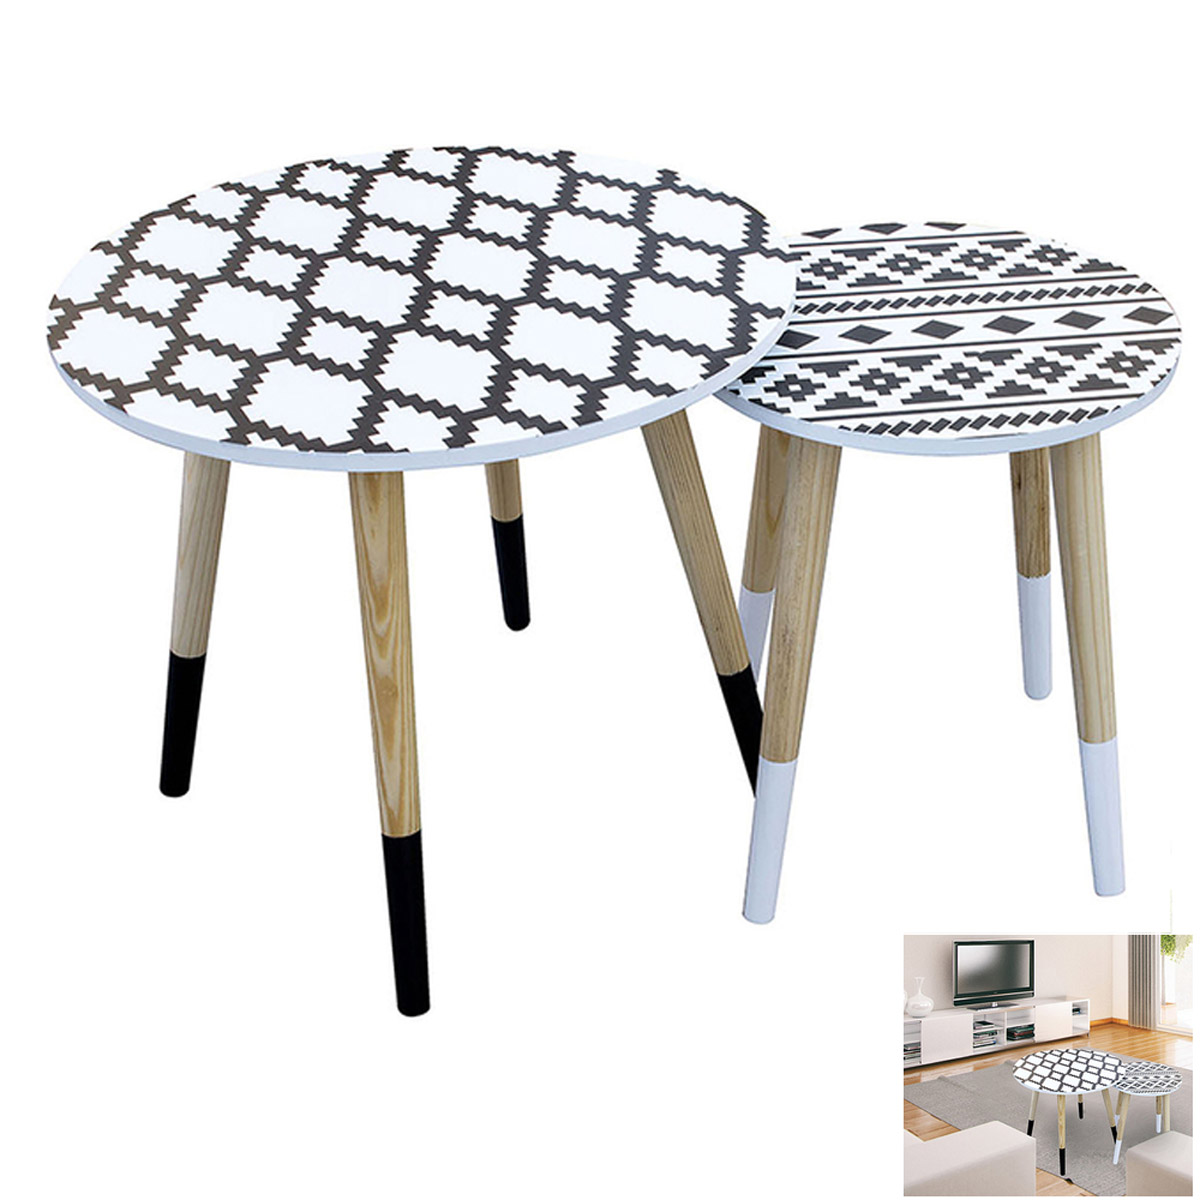 2 tables gigognes bois \'Boho\' noir blanc - 48 et 33 cm - [R2396]